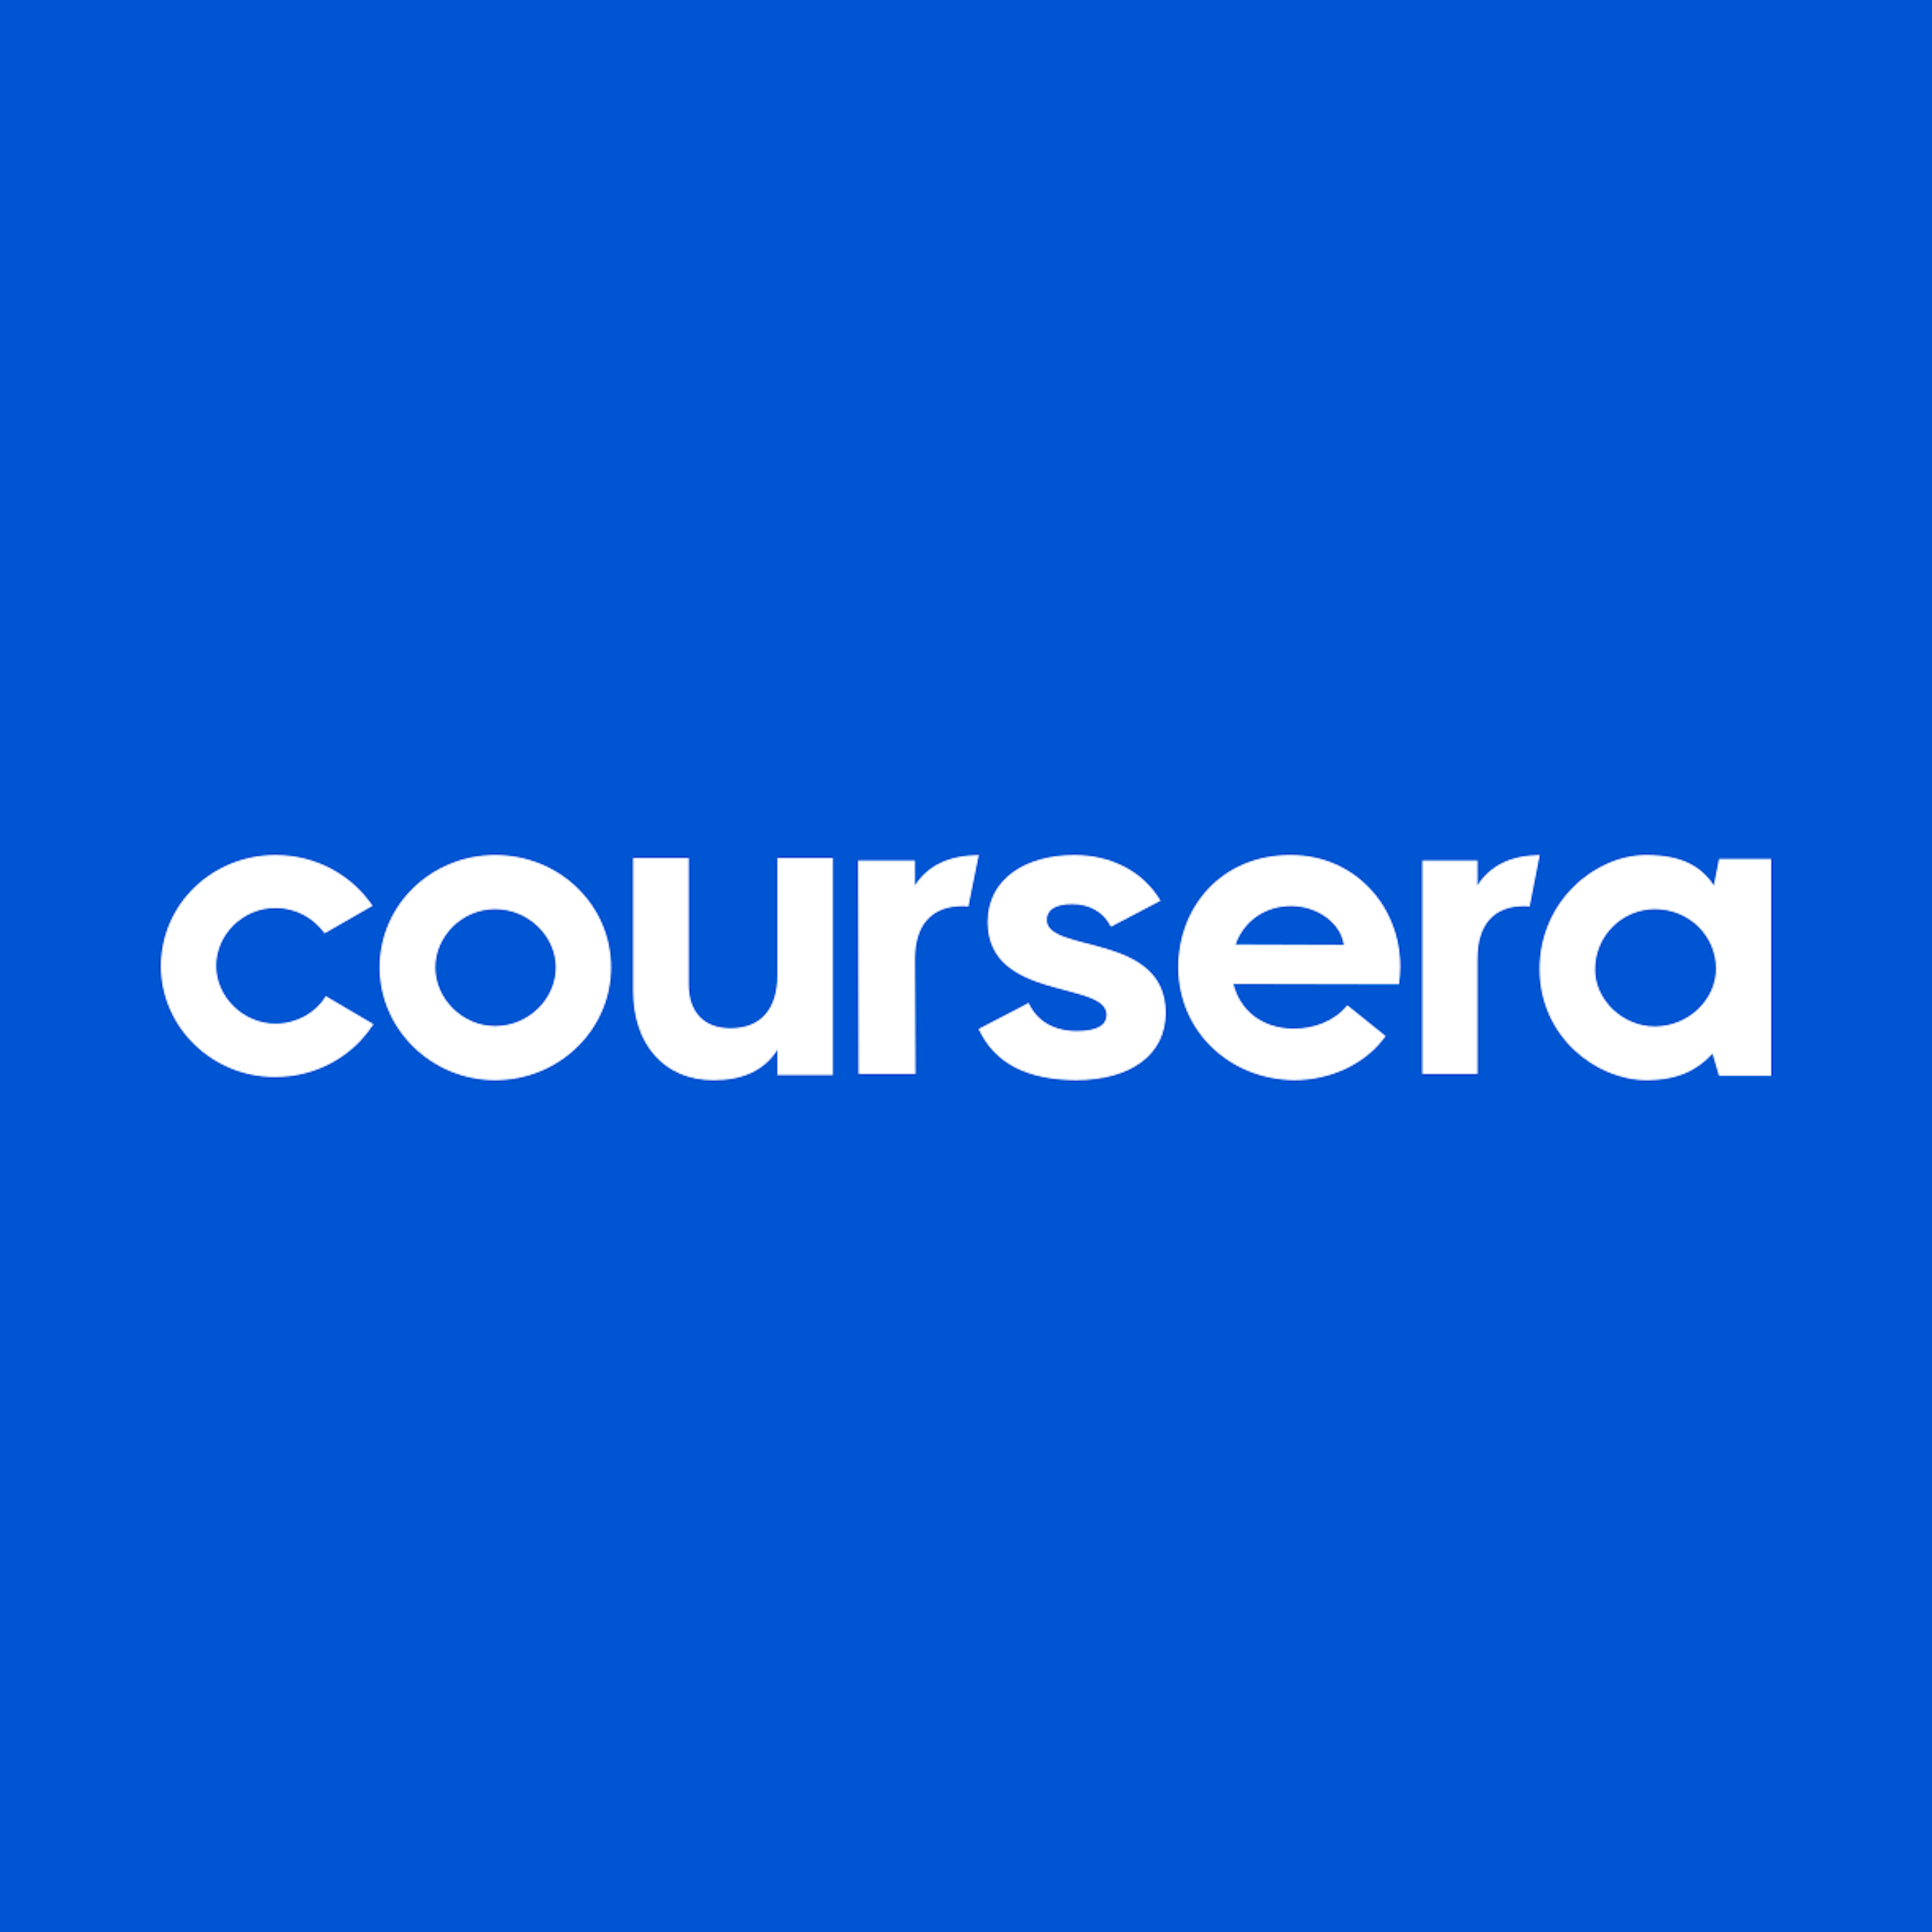 Coursera for Campus Logo